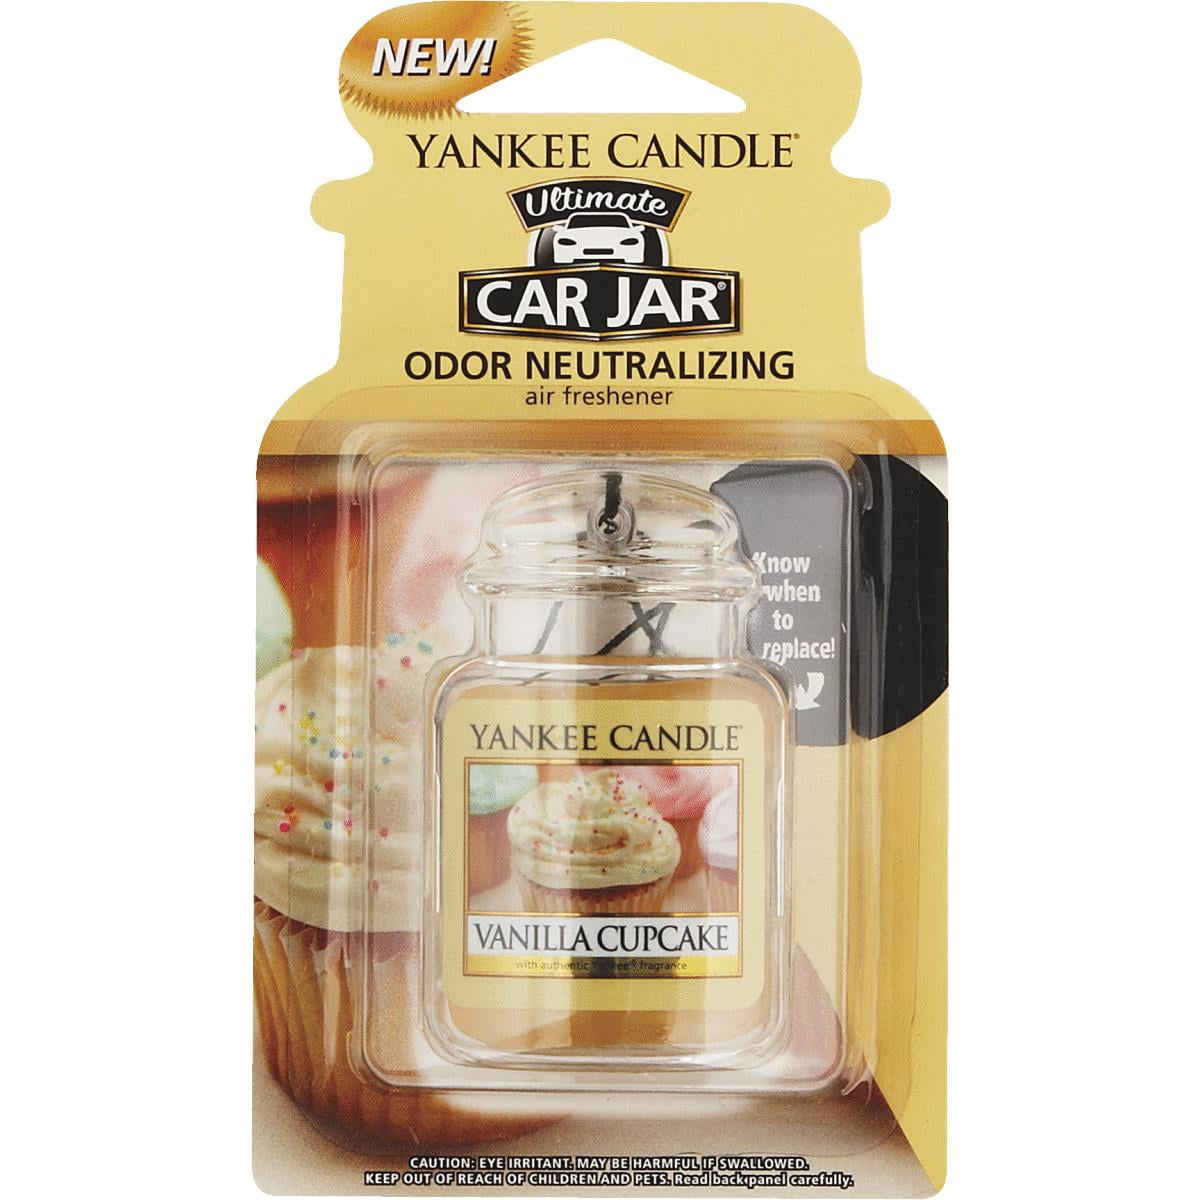 Yankee Candle Clean Cotton Autoduft Car Jar Ultimate